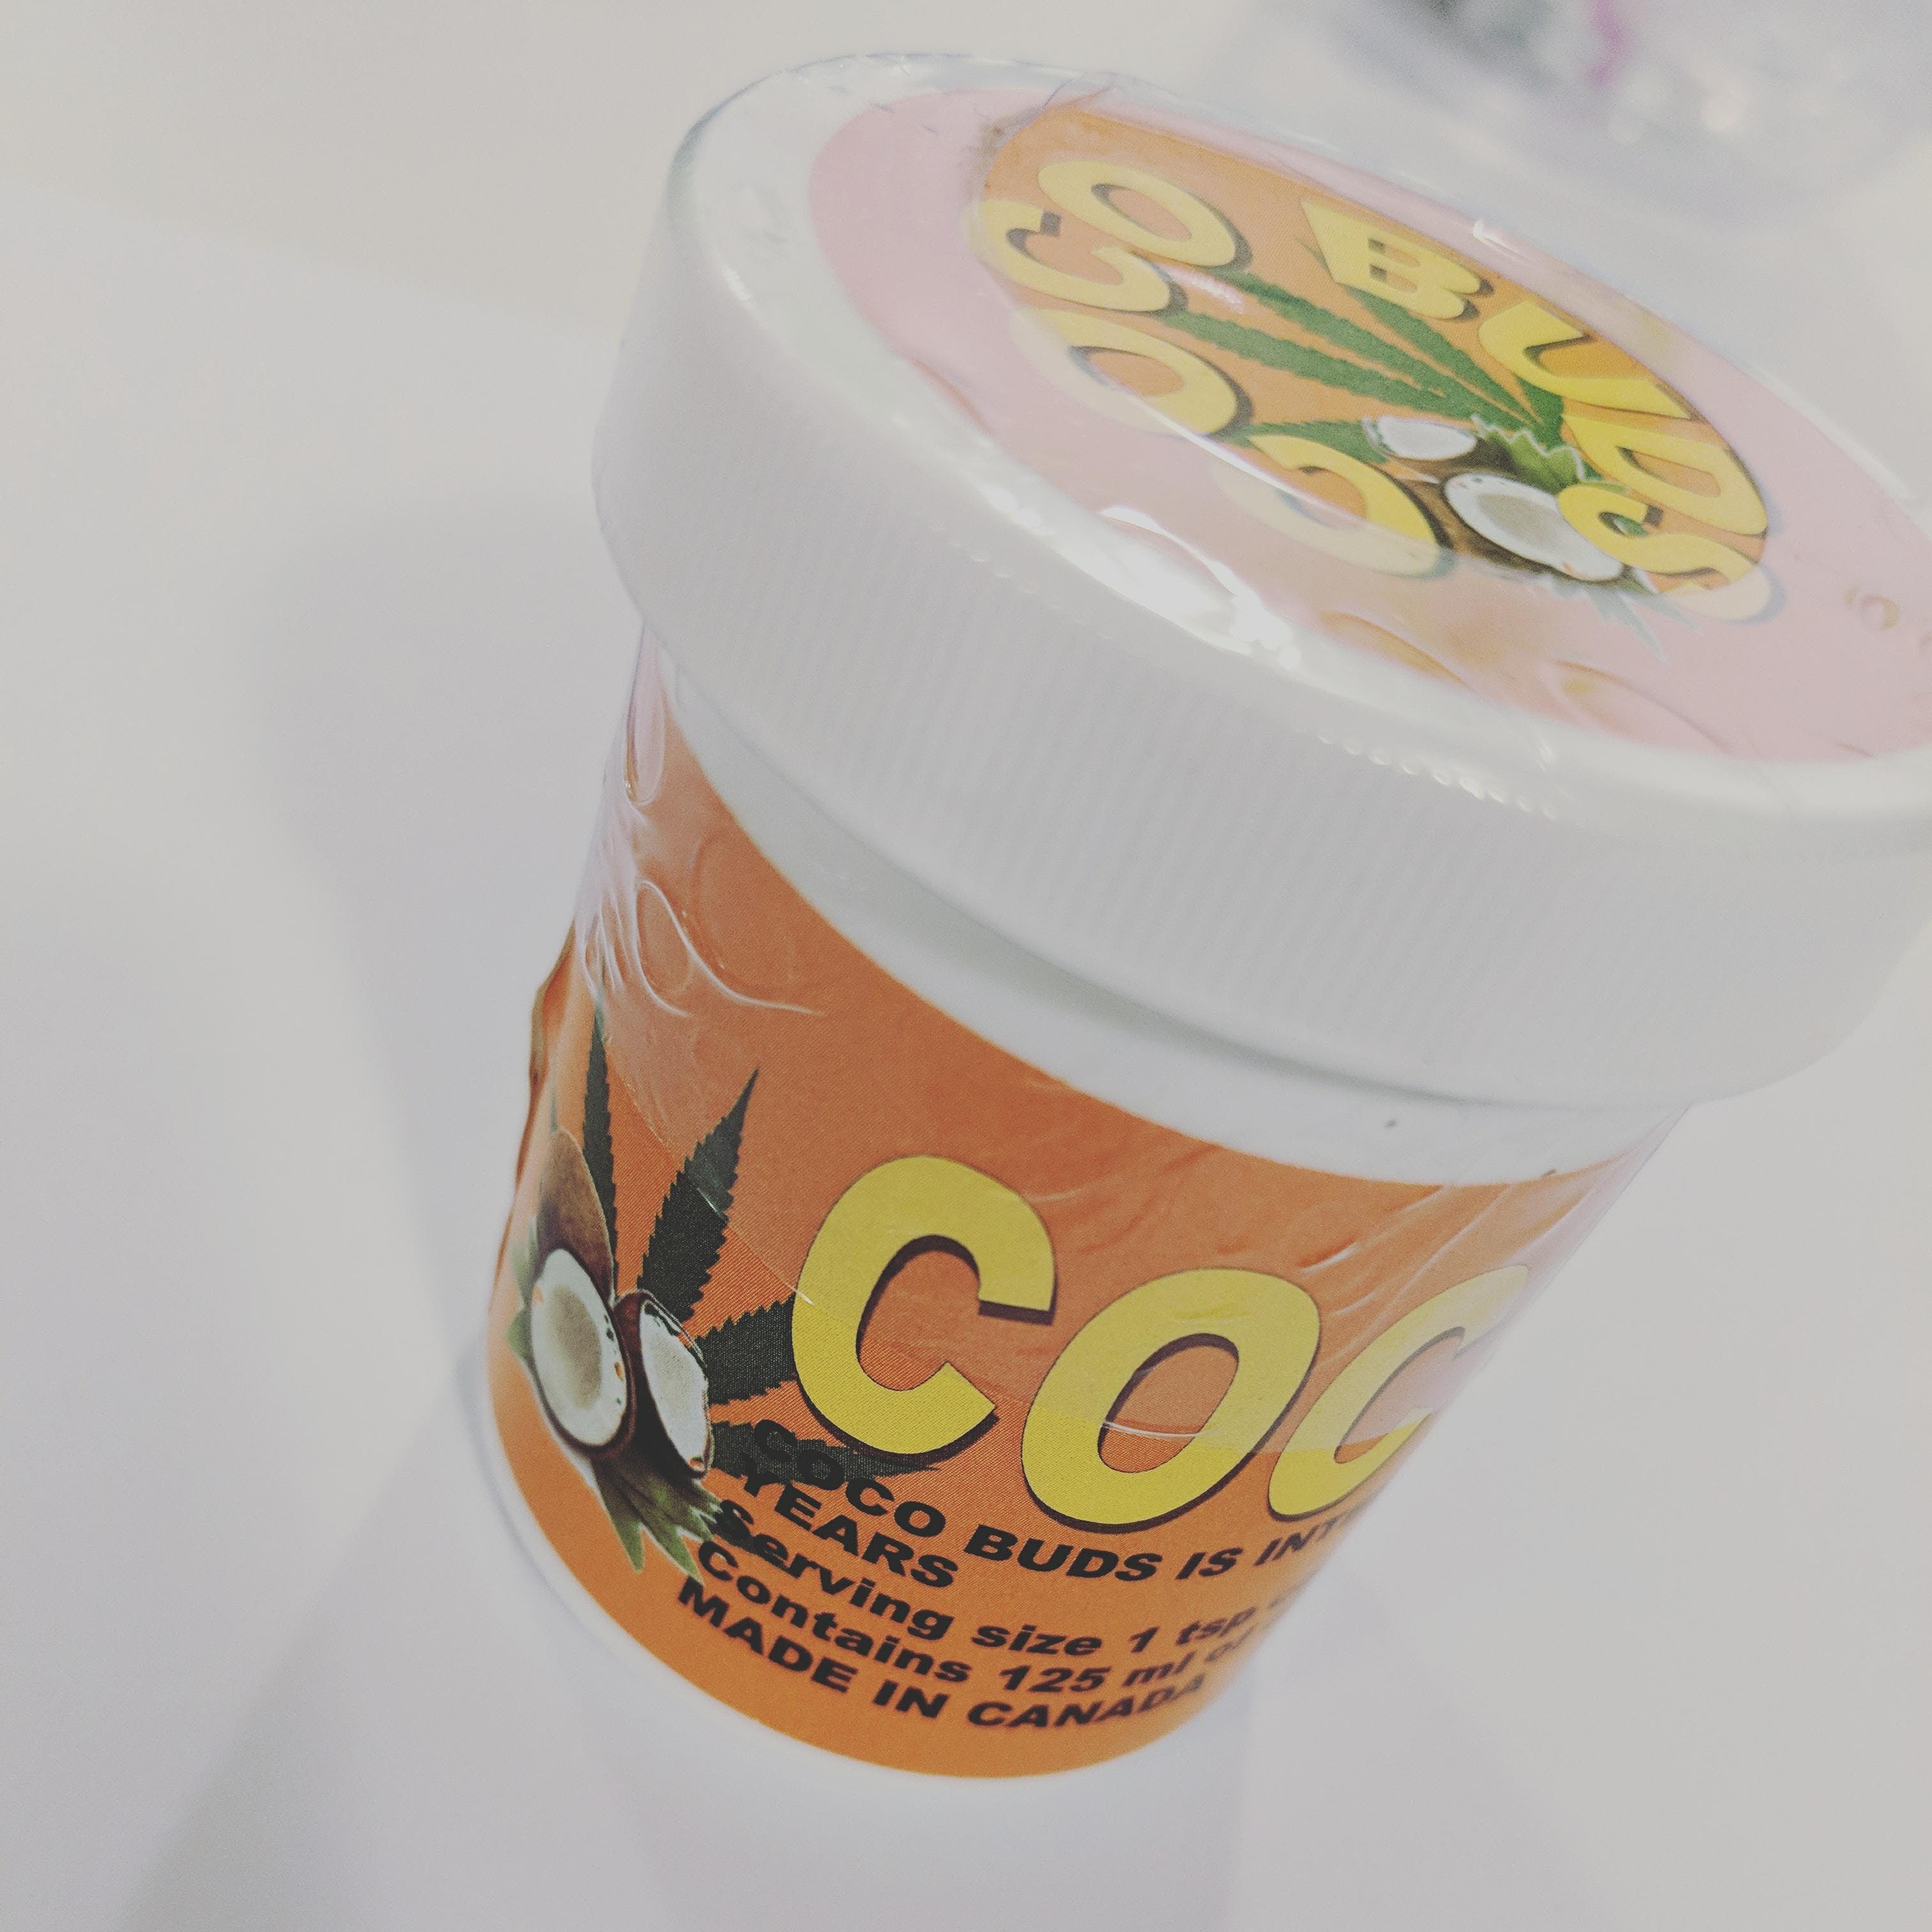 Coco Buds